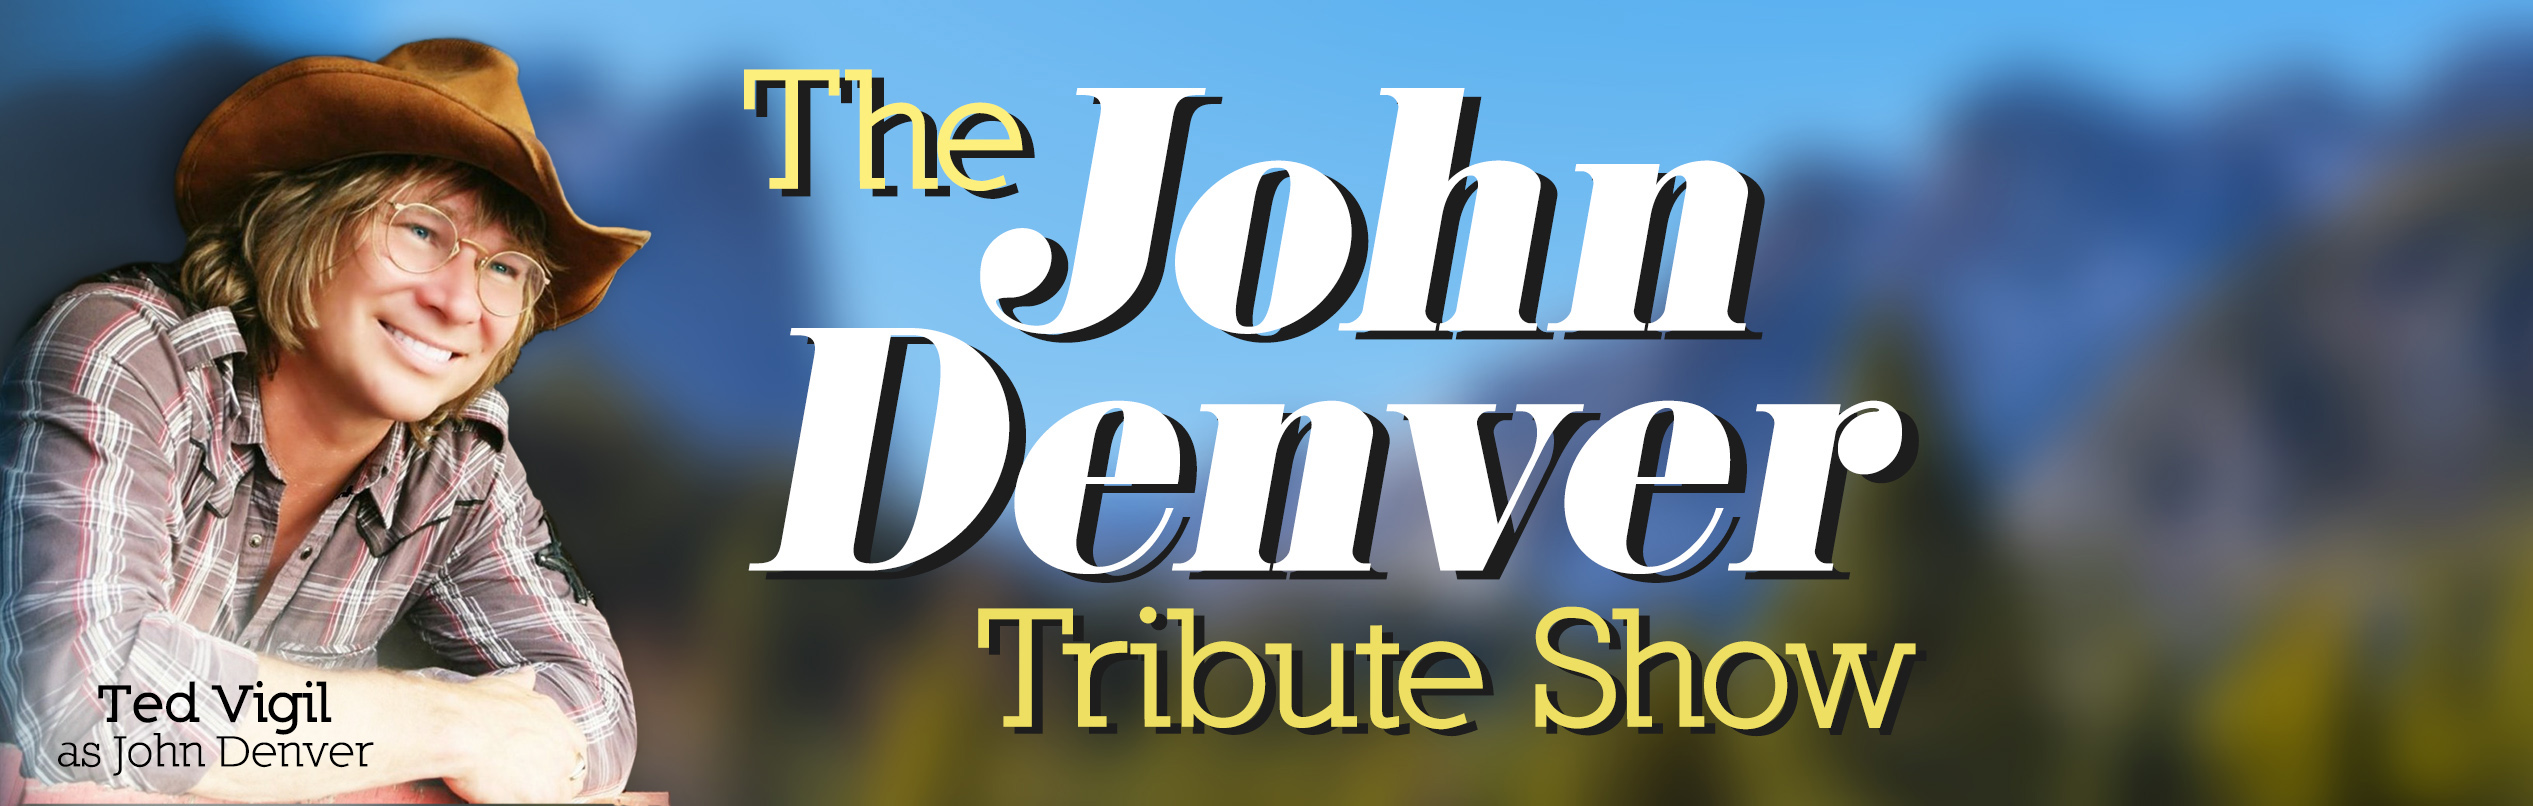 The John Denver Tribute Show